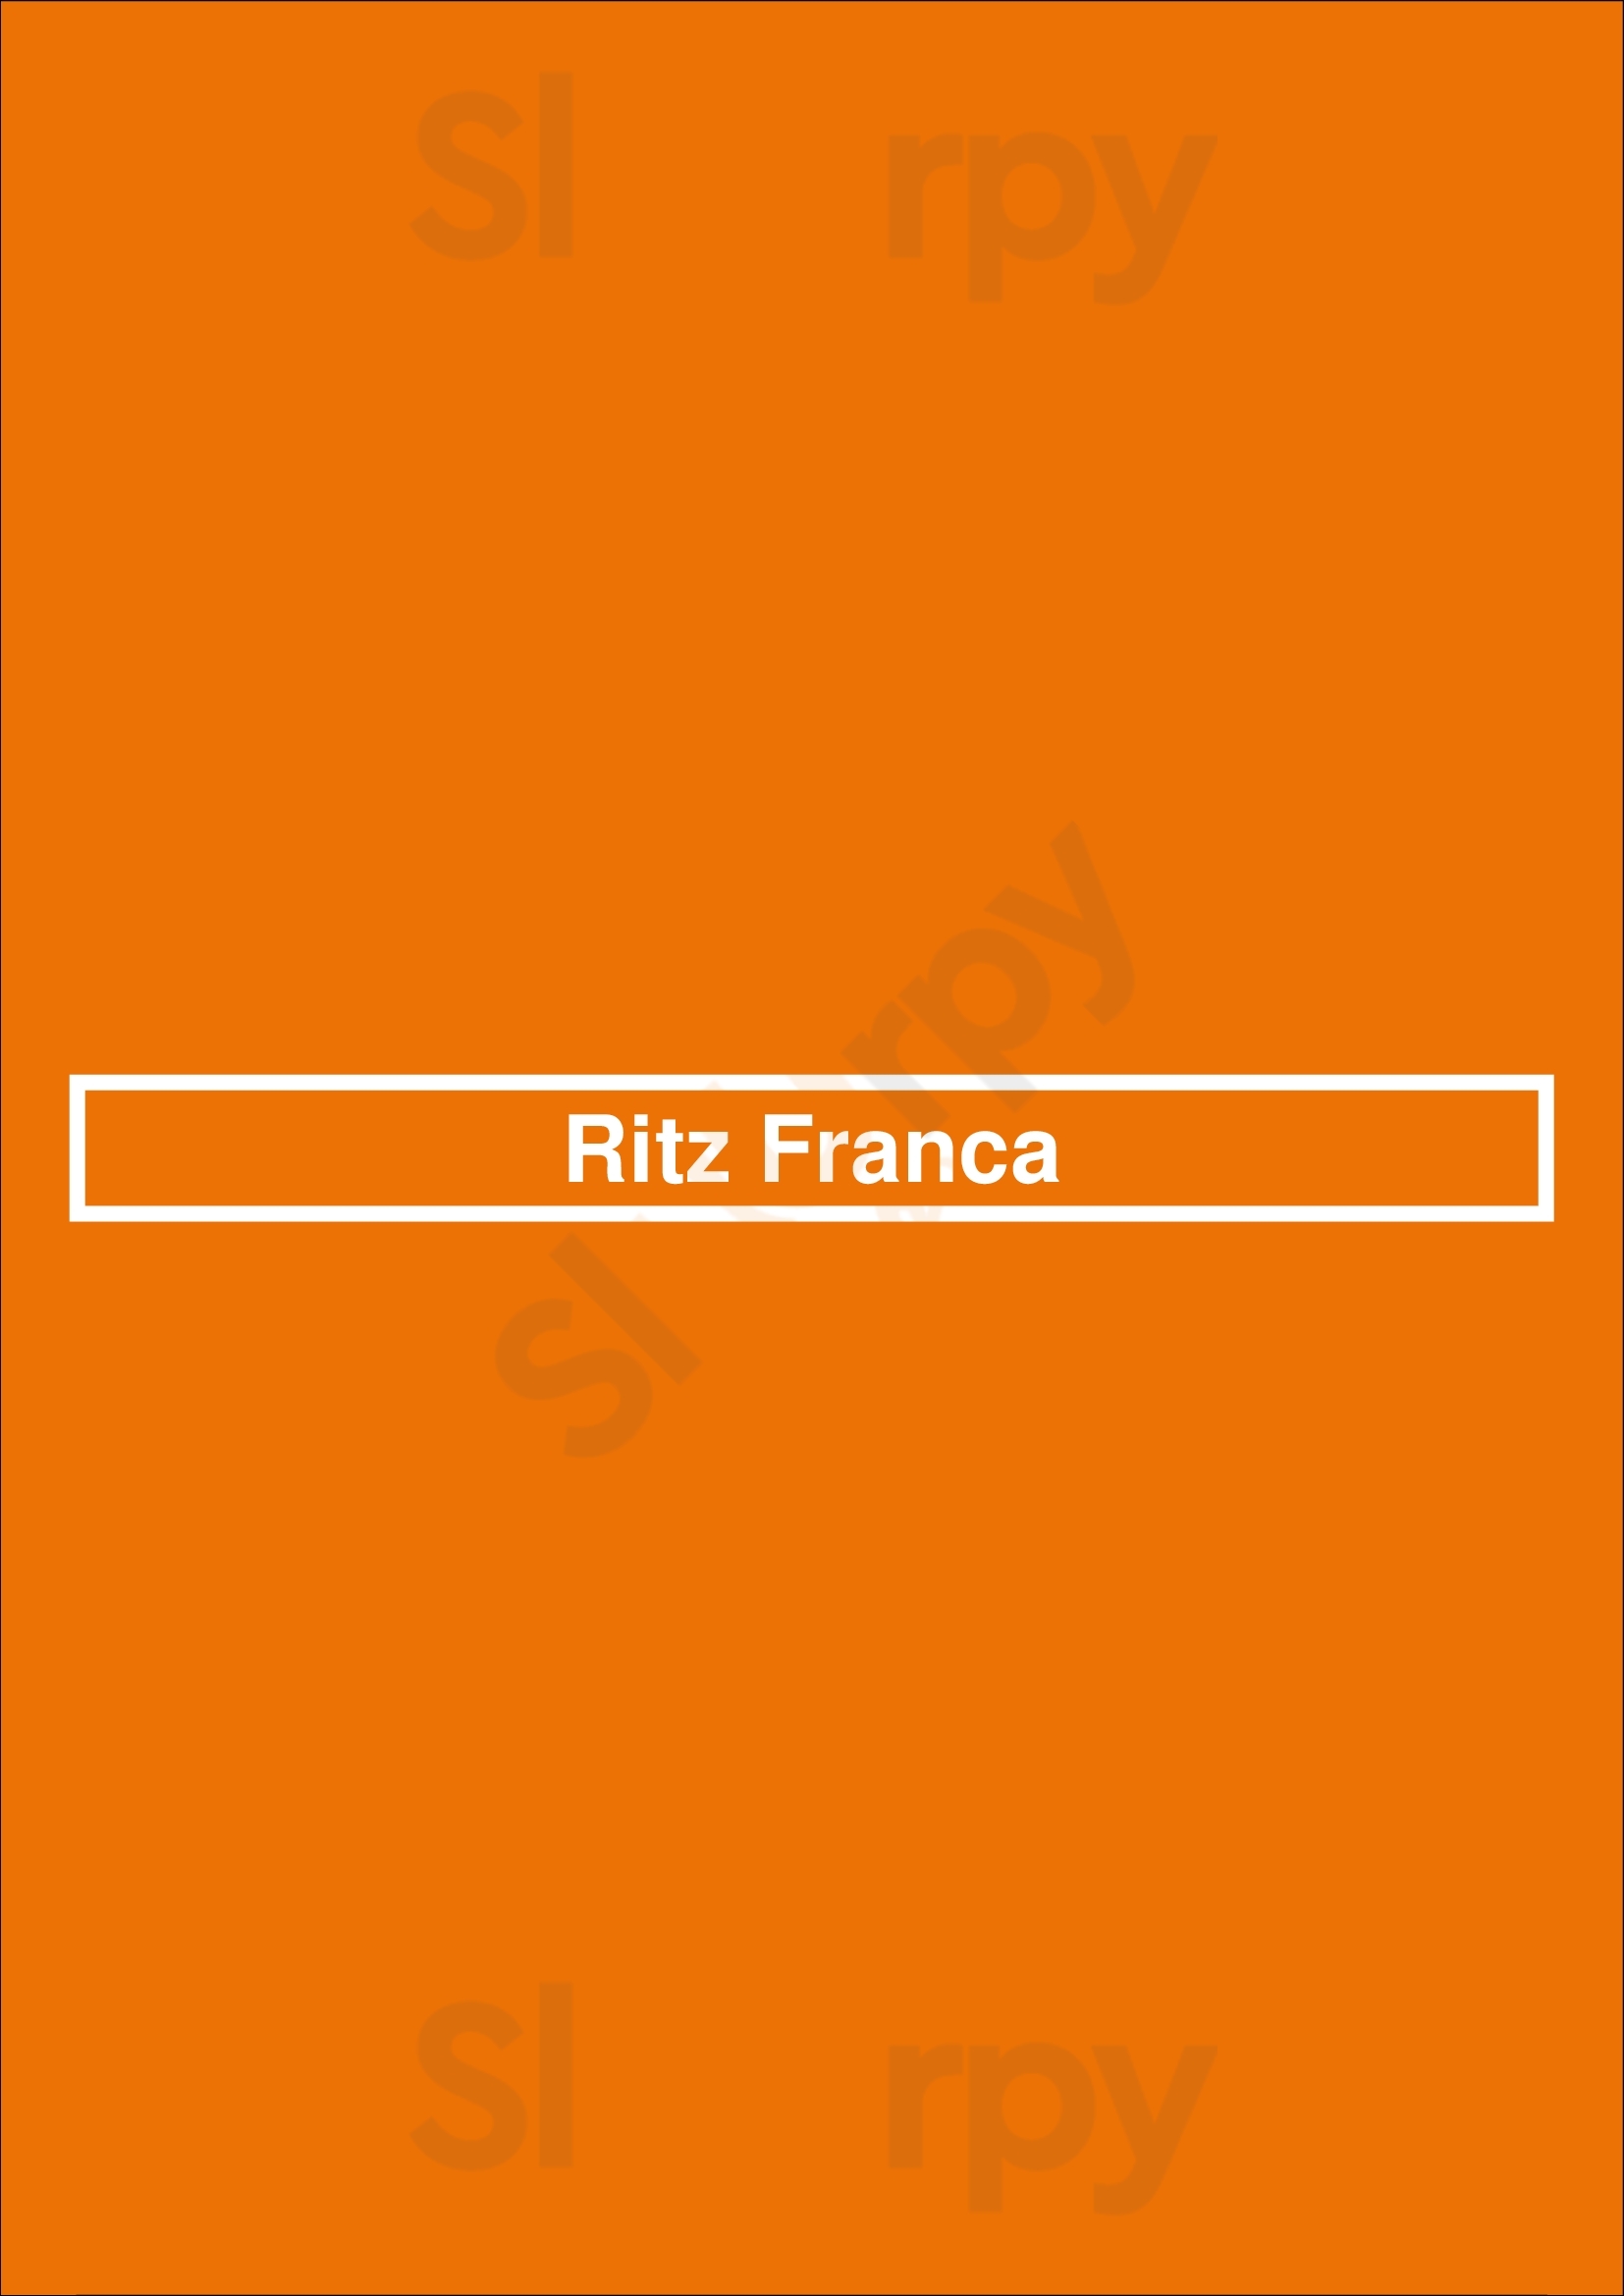 Ritz Franca São Paulo Menu - 1